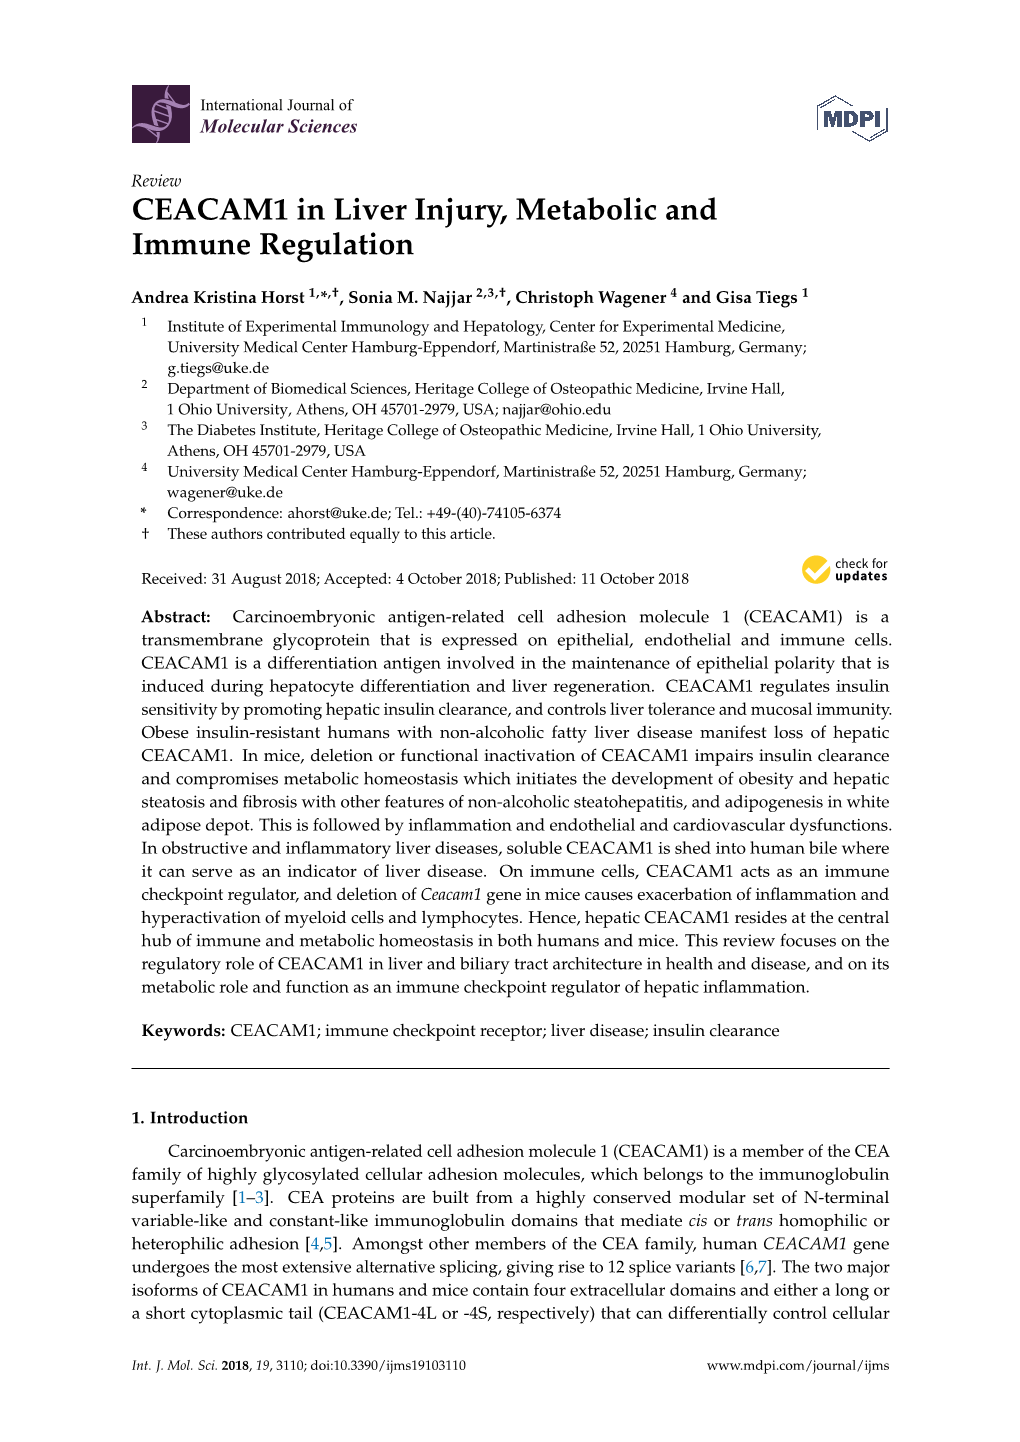 CEACAM1 in Liver Injury, Metabolic and Immune Regulation